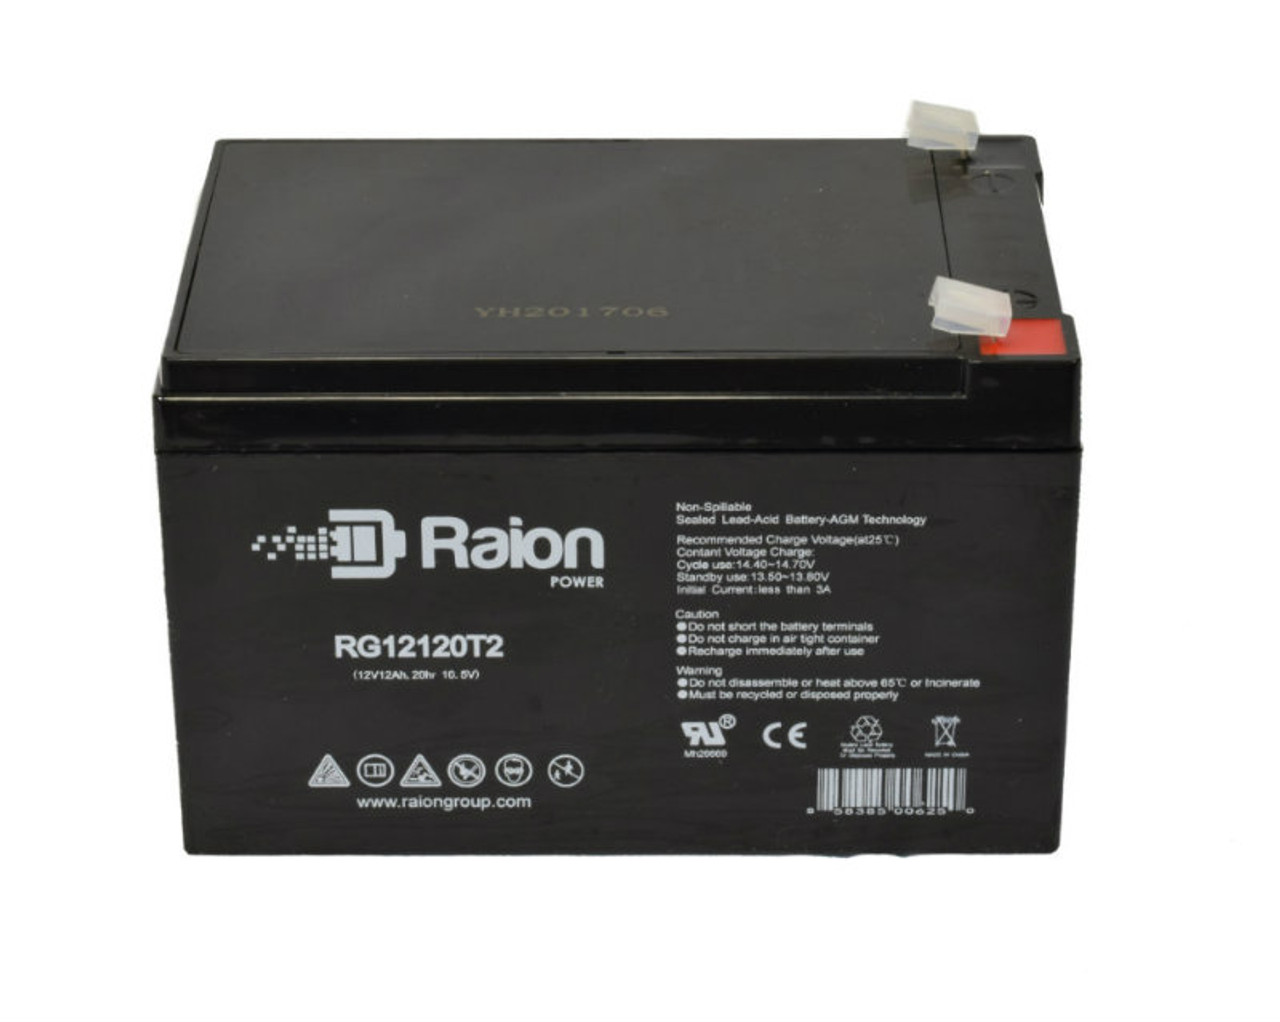 Raion Power RG12120T2 SLA Battery for Boreem Jia 602-D